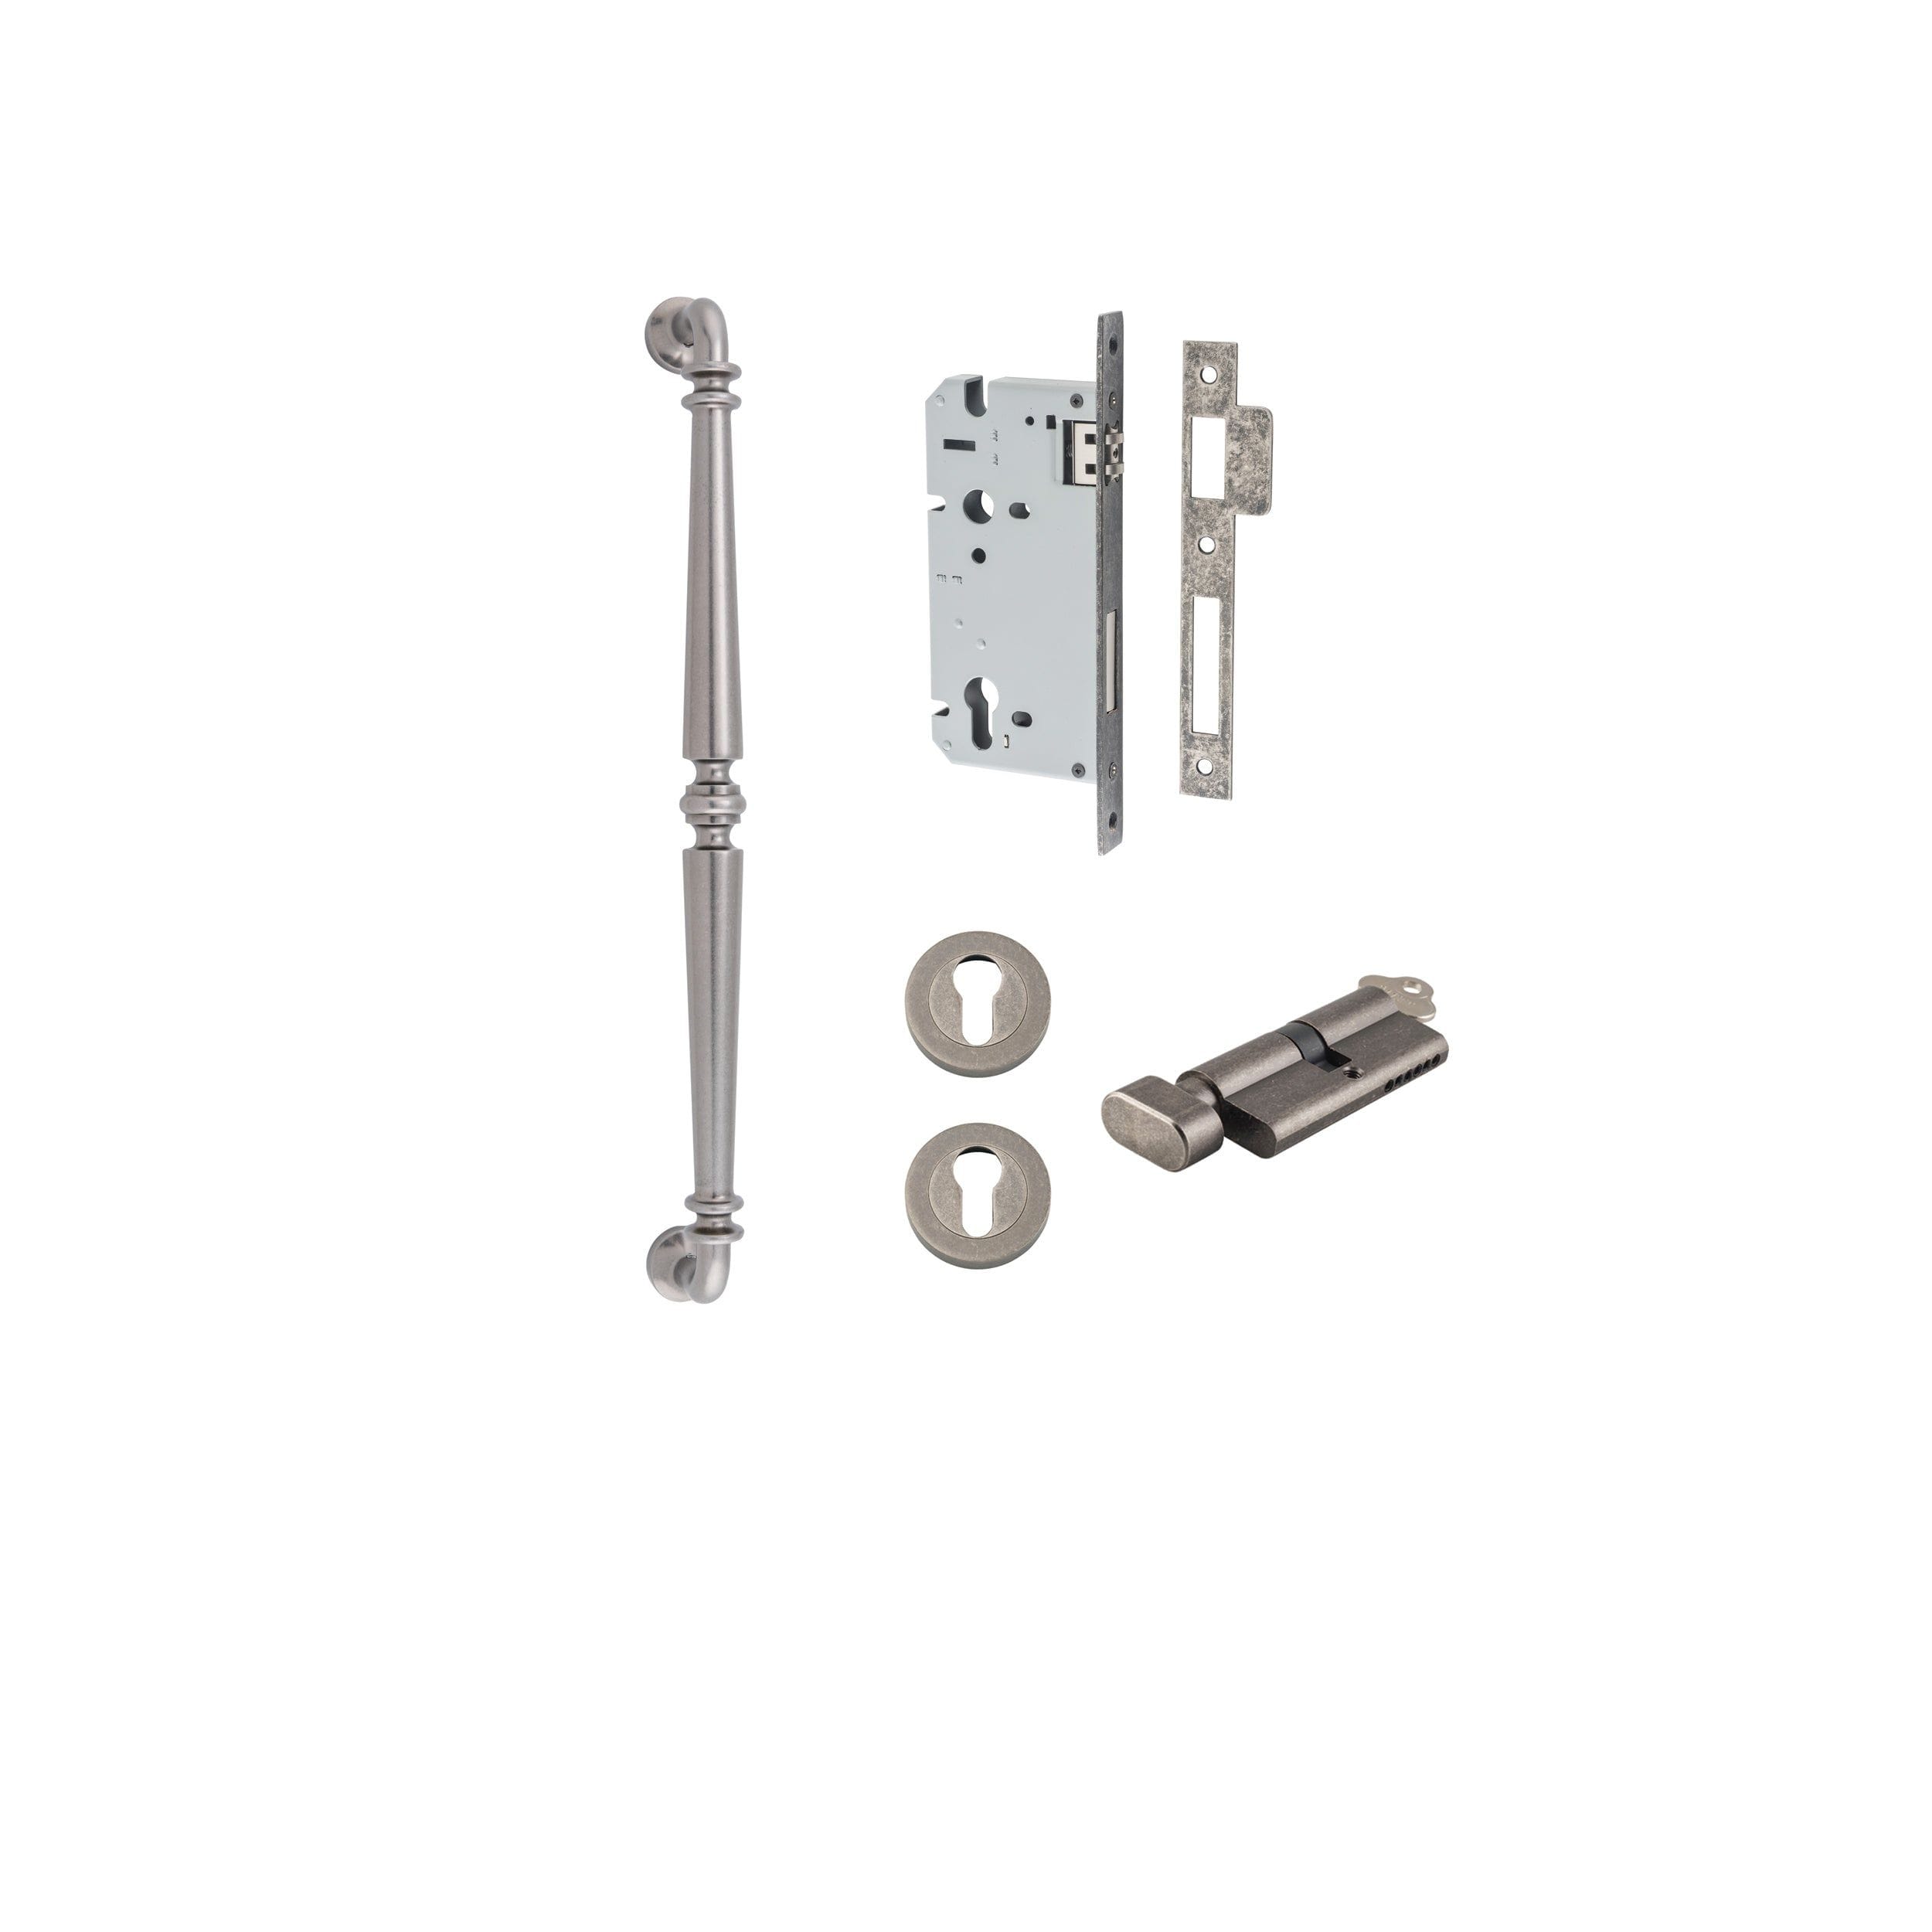 Sarlat Pull Handle Distressed Nickel 450mm Entrance Kit - Key/Thumb Turn